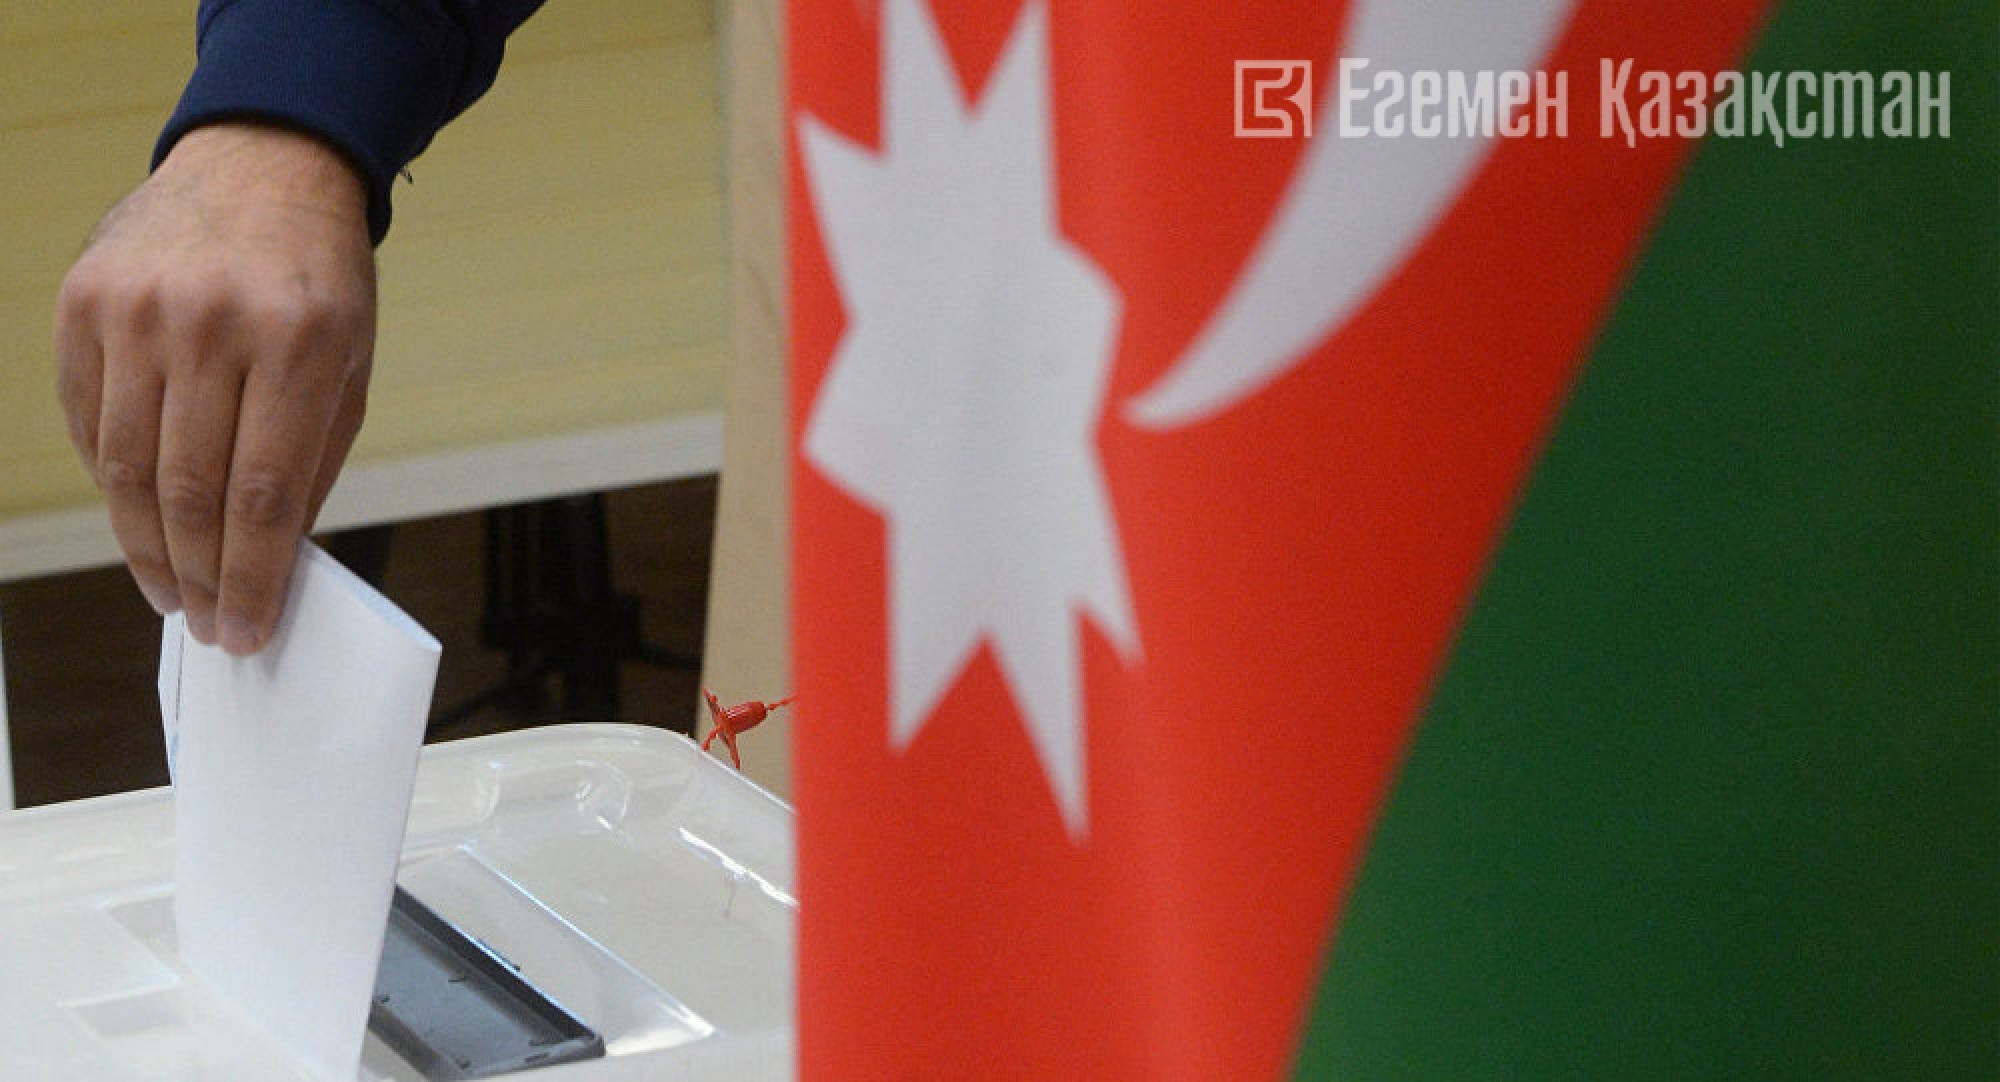 Presidential elections starts in Azerbaijan